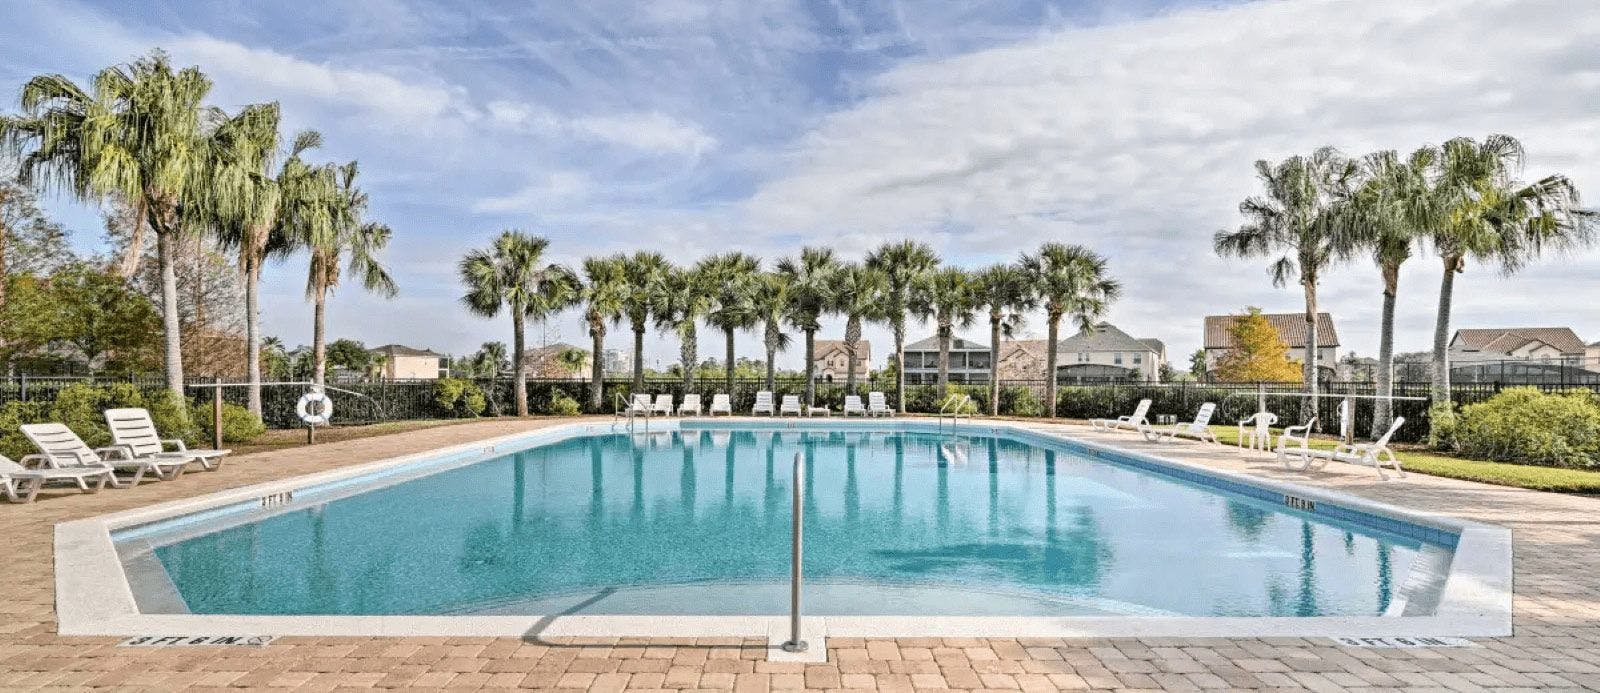 Westhaven Resort community pool